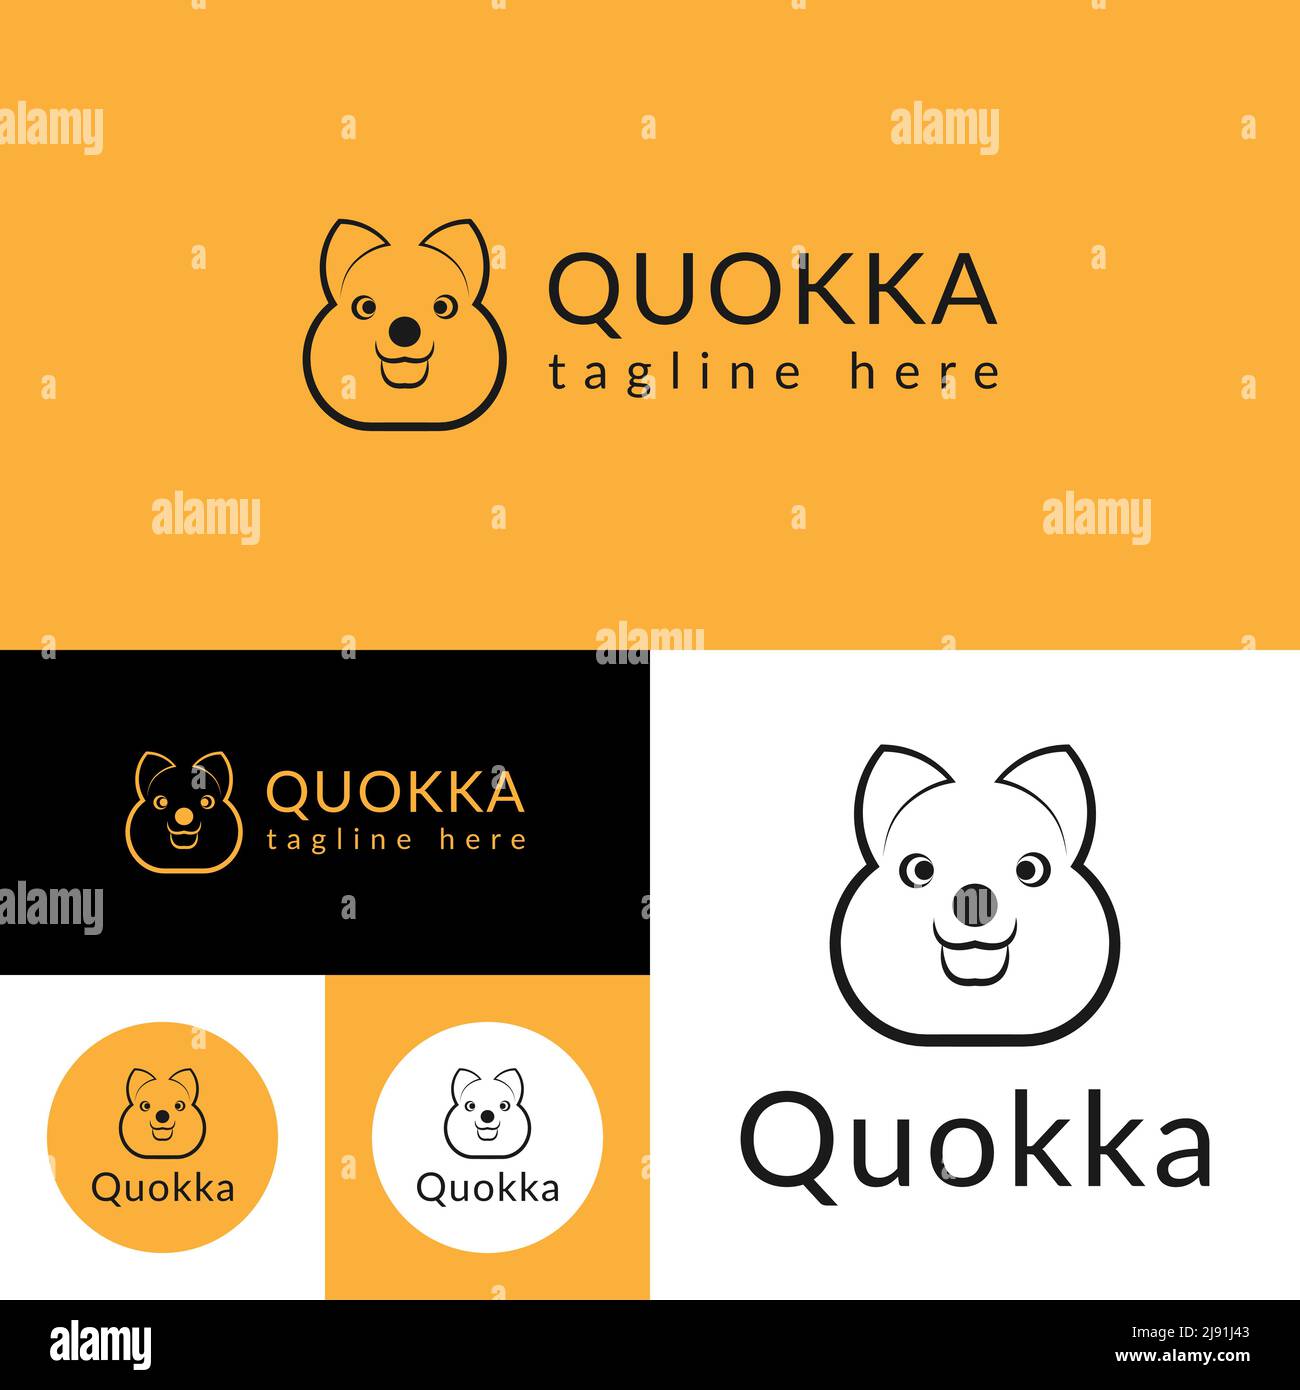 Quokka Font